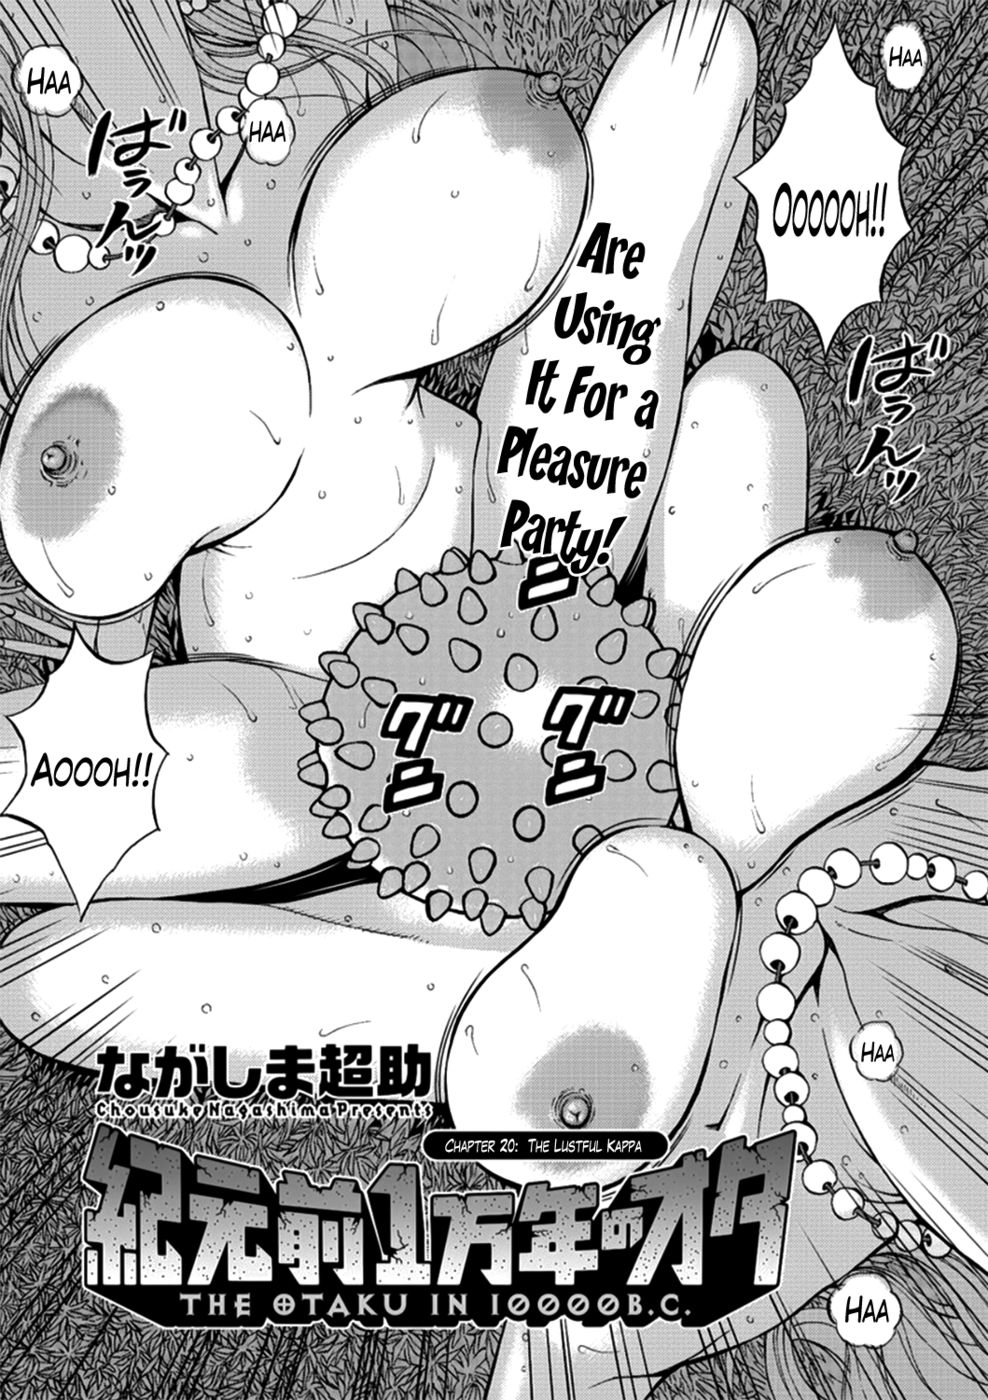 Hentai Manga Comic-The Otaku in 10,000 B.C.-Chapter 20-2